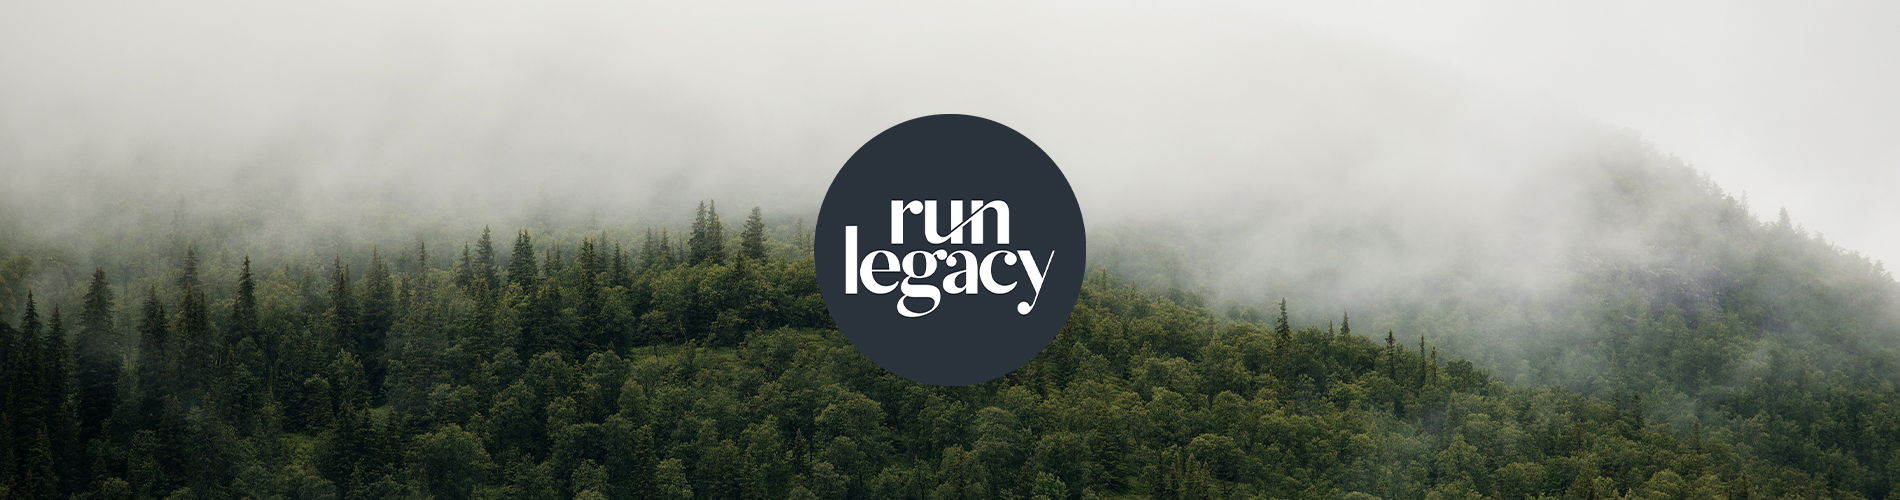 Introducing XMiles' partnership with Run Legacy